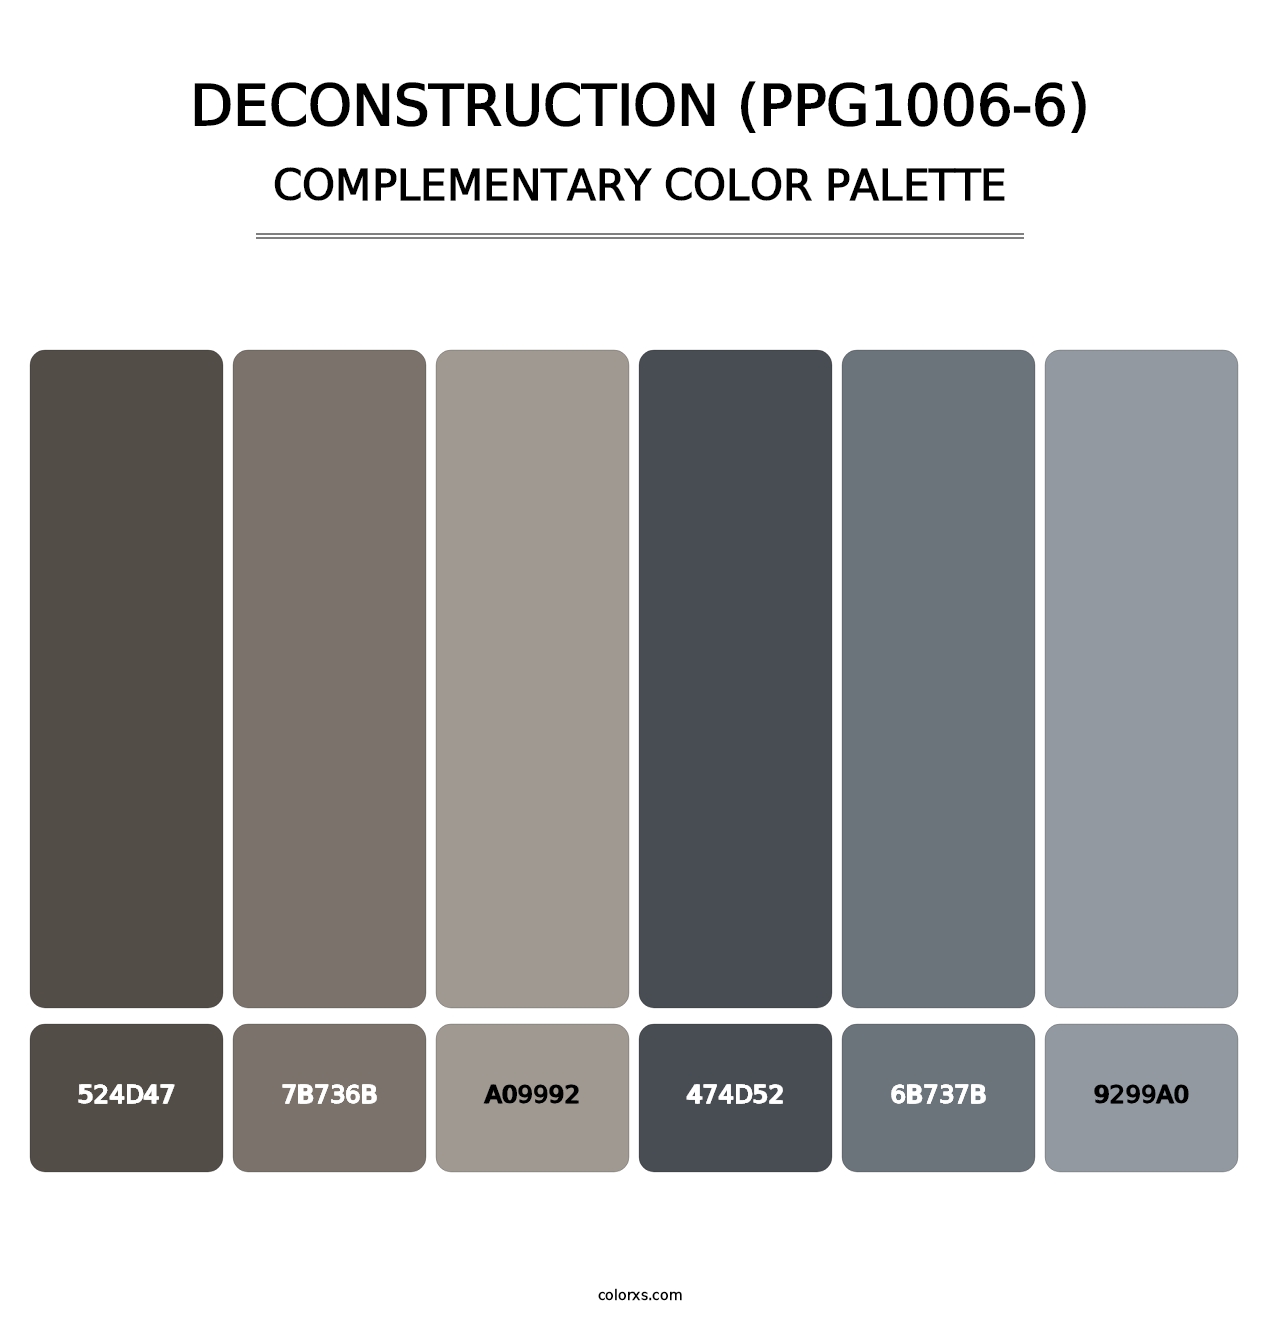 Deconstruction (PPG1006-6) - Complementary Color Palette